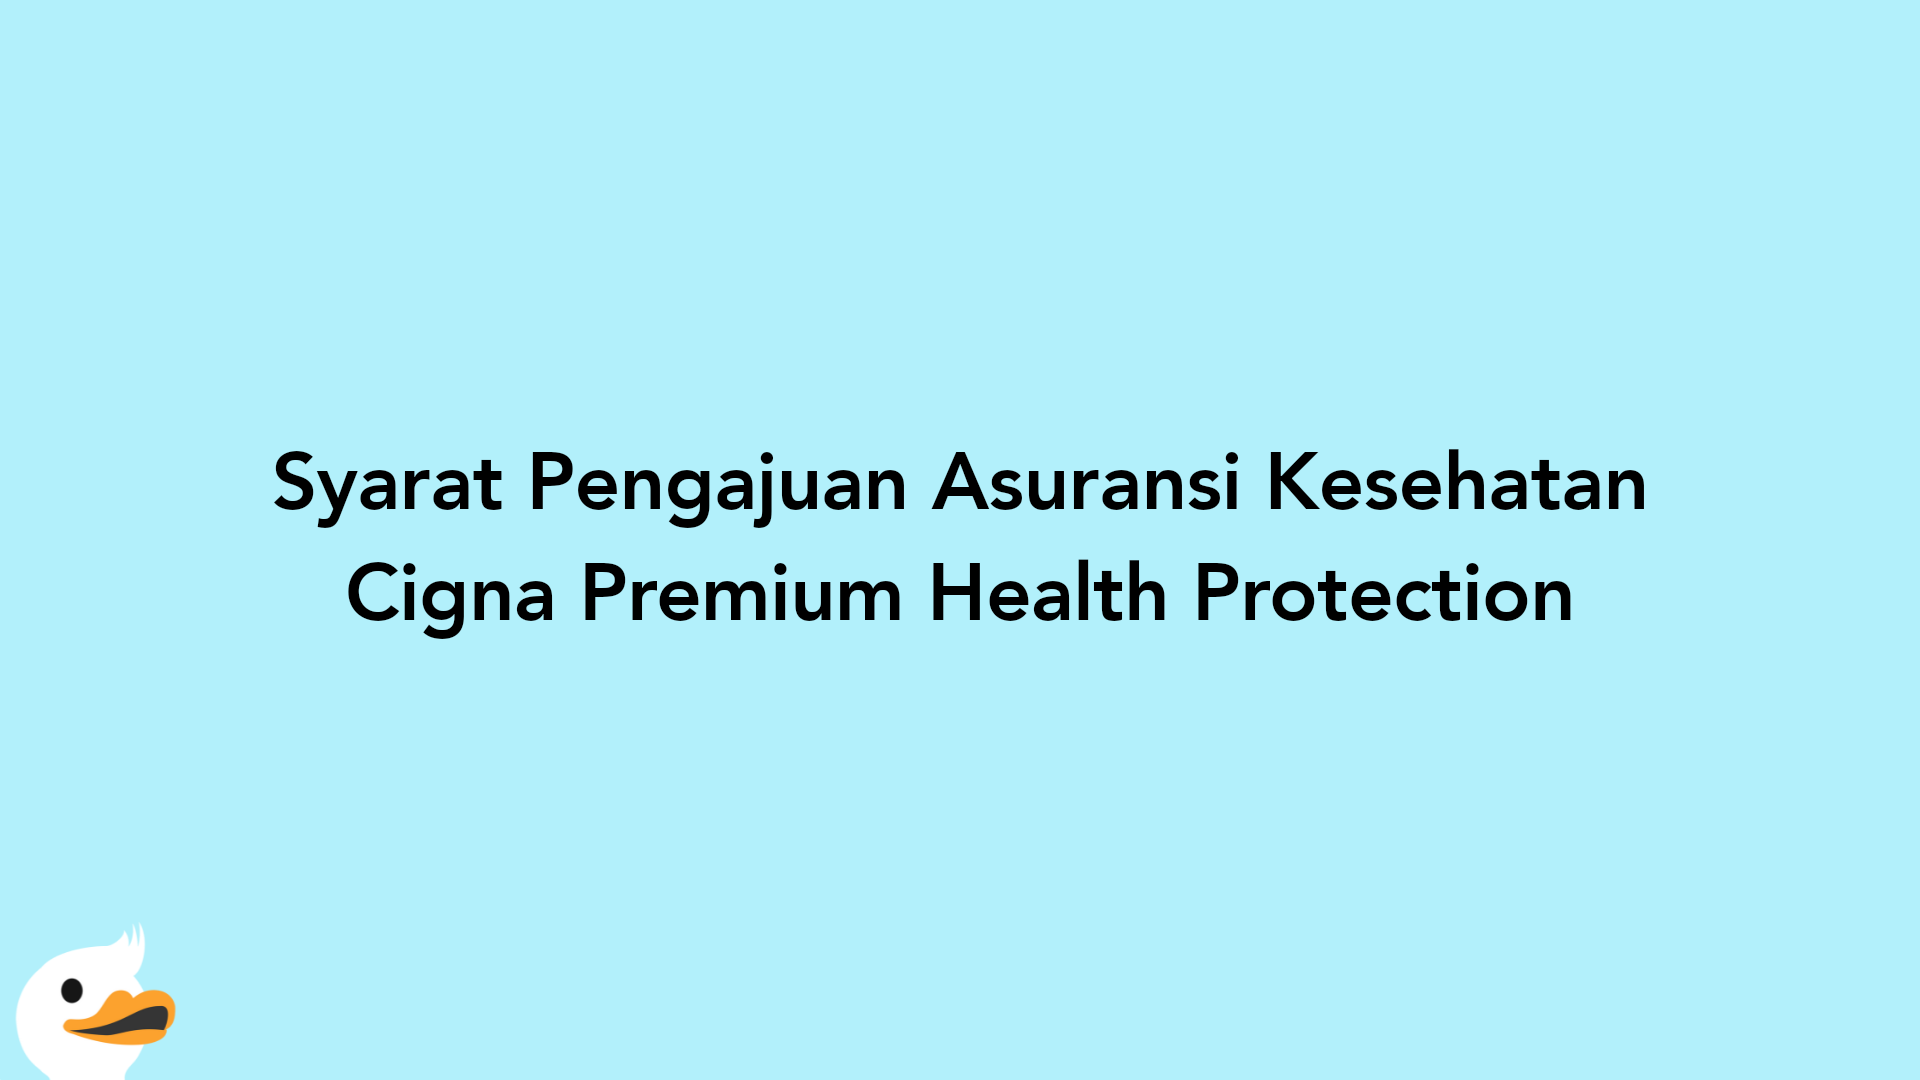 Syarat Pengajuan Asuransi Kesehatan Cigna Premium Health Protection